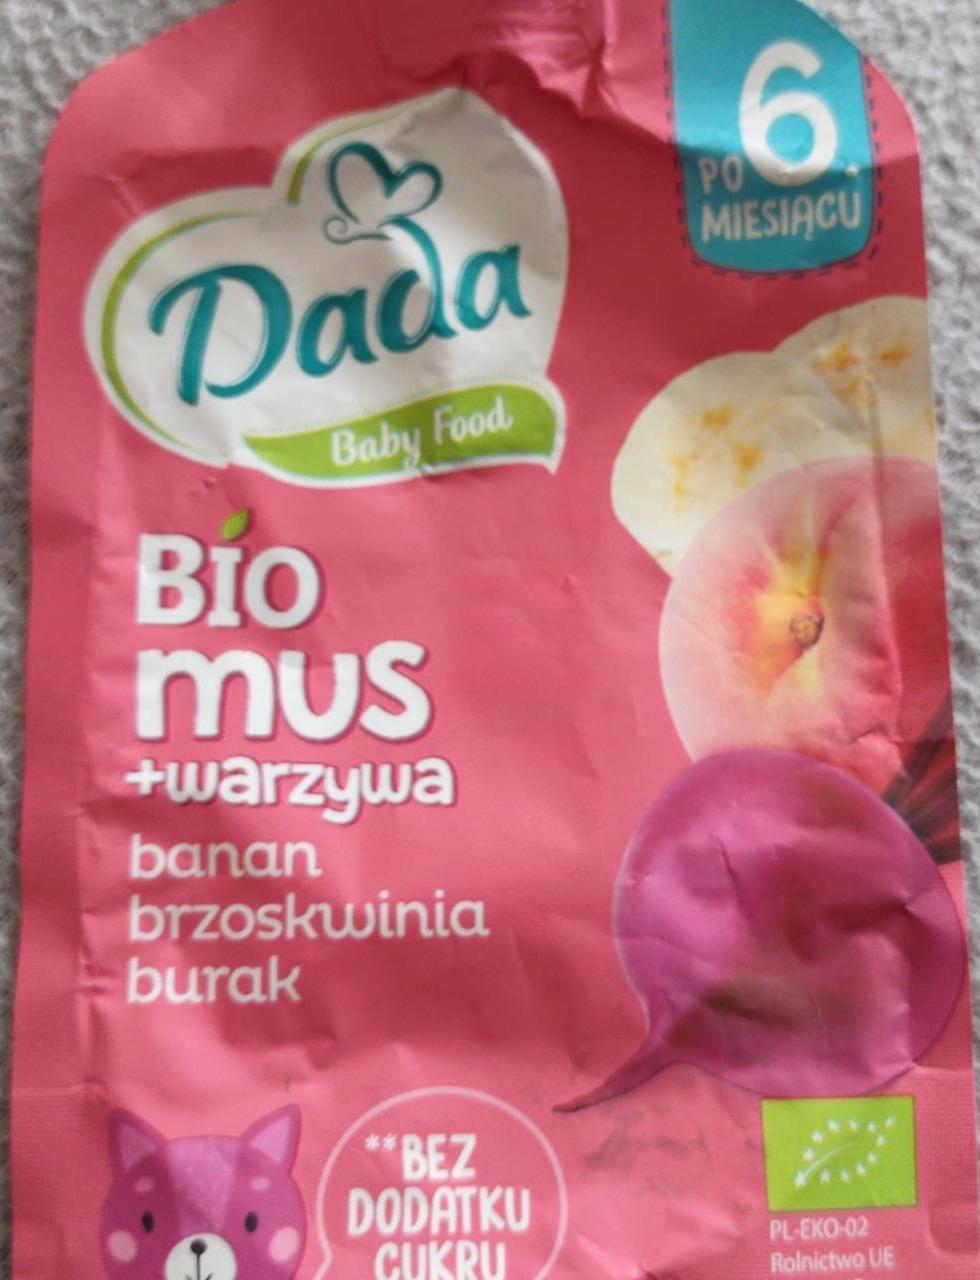 Zdjęcia - Baby Food Bio mus + warzywa banan brzoskwinia burak Dada